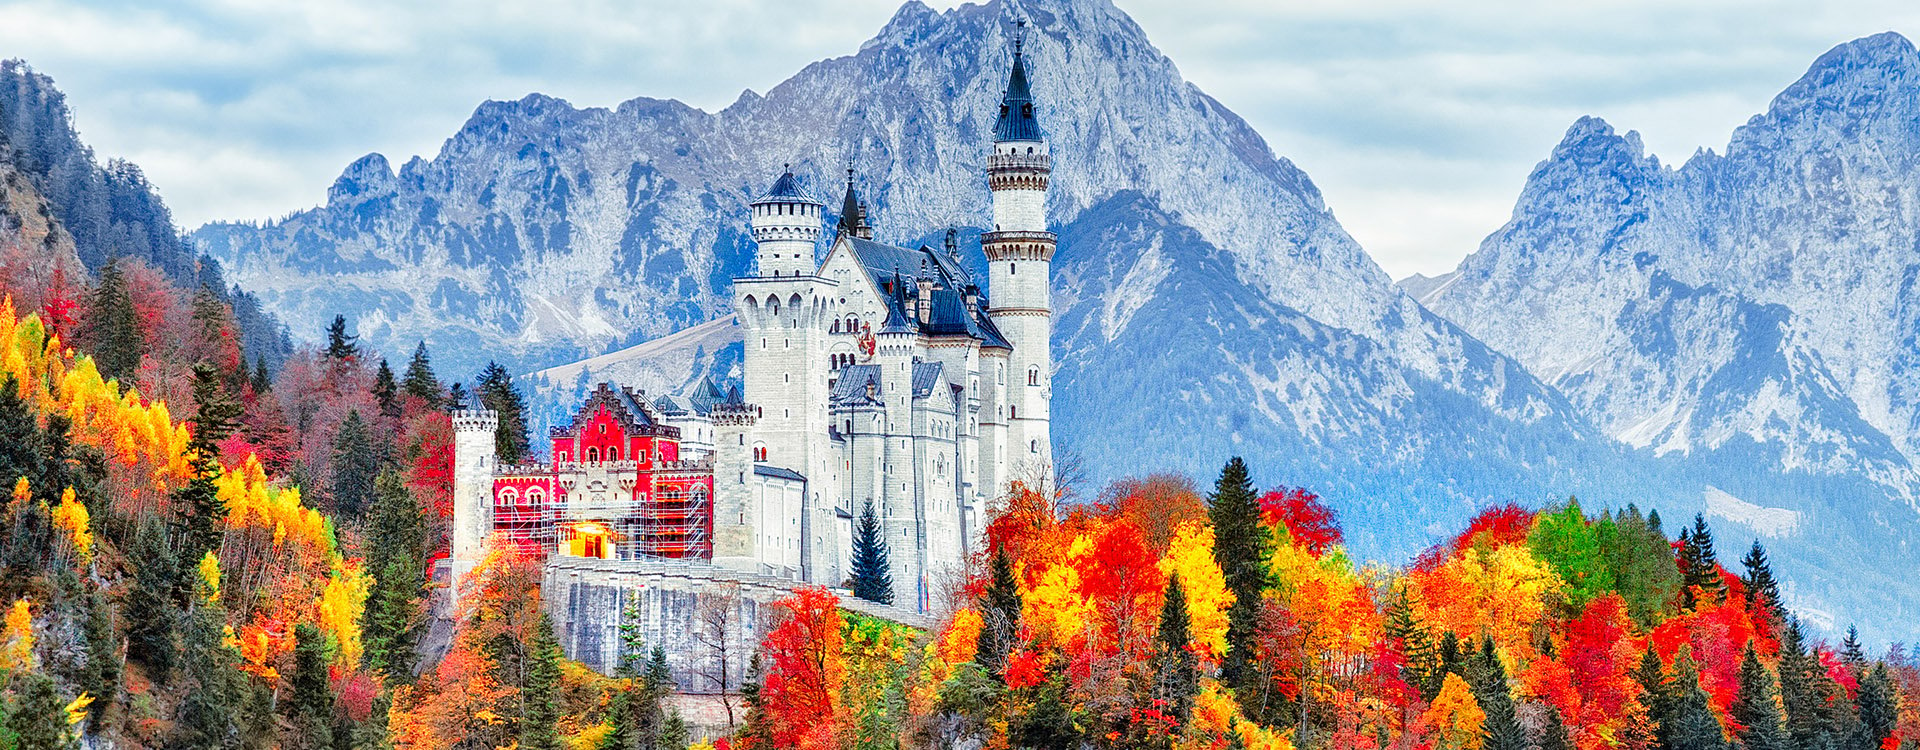 medieval castle in Germany, Bavaria land